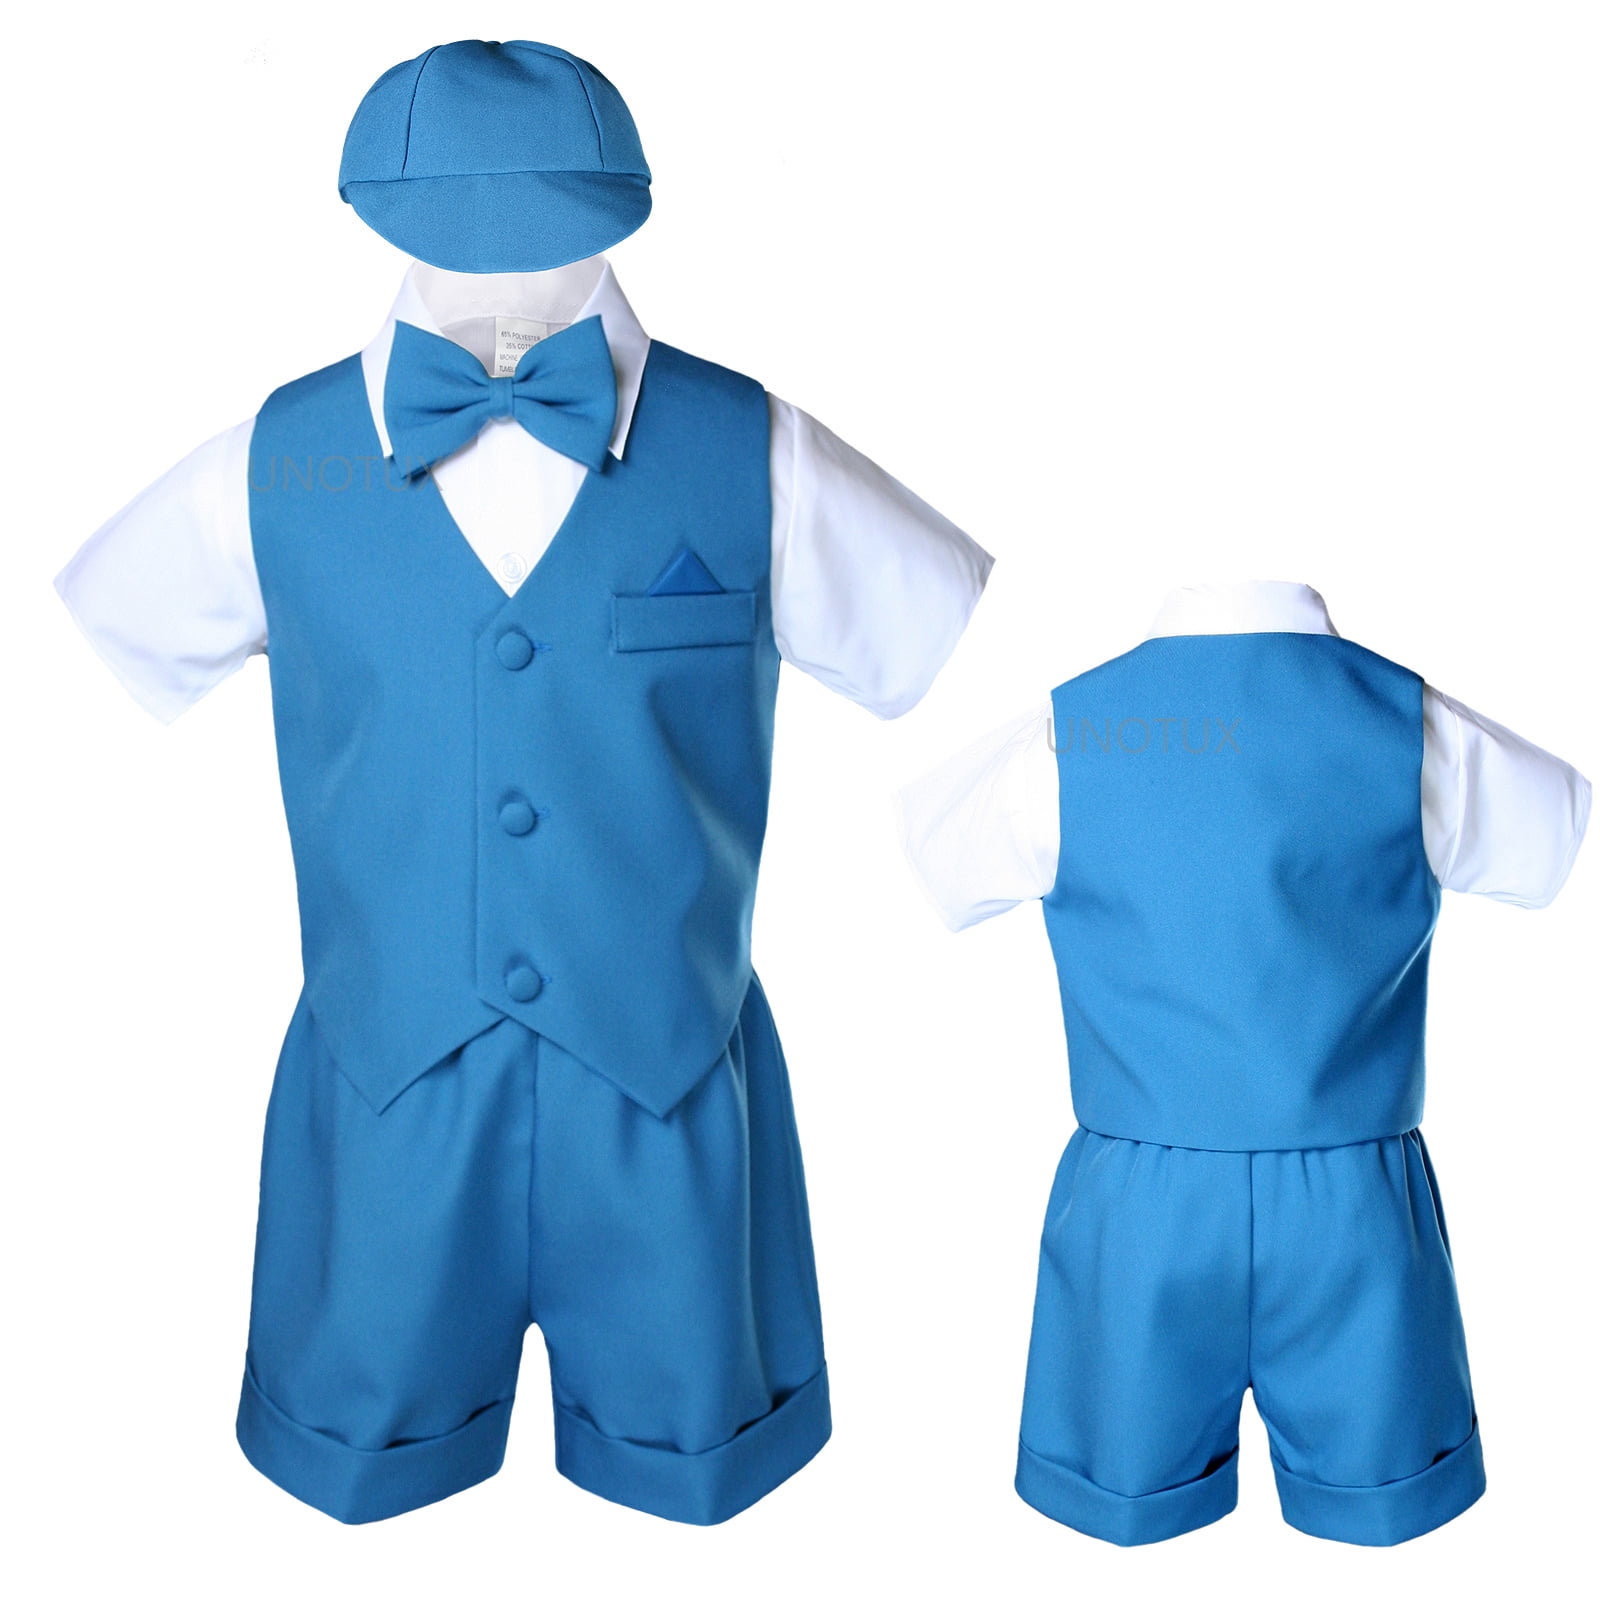 Baby Boy Toddler Baptism Church Synagogue Formal Cross Vest Set Suit w/ Hat S-4T 